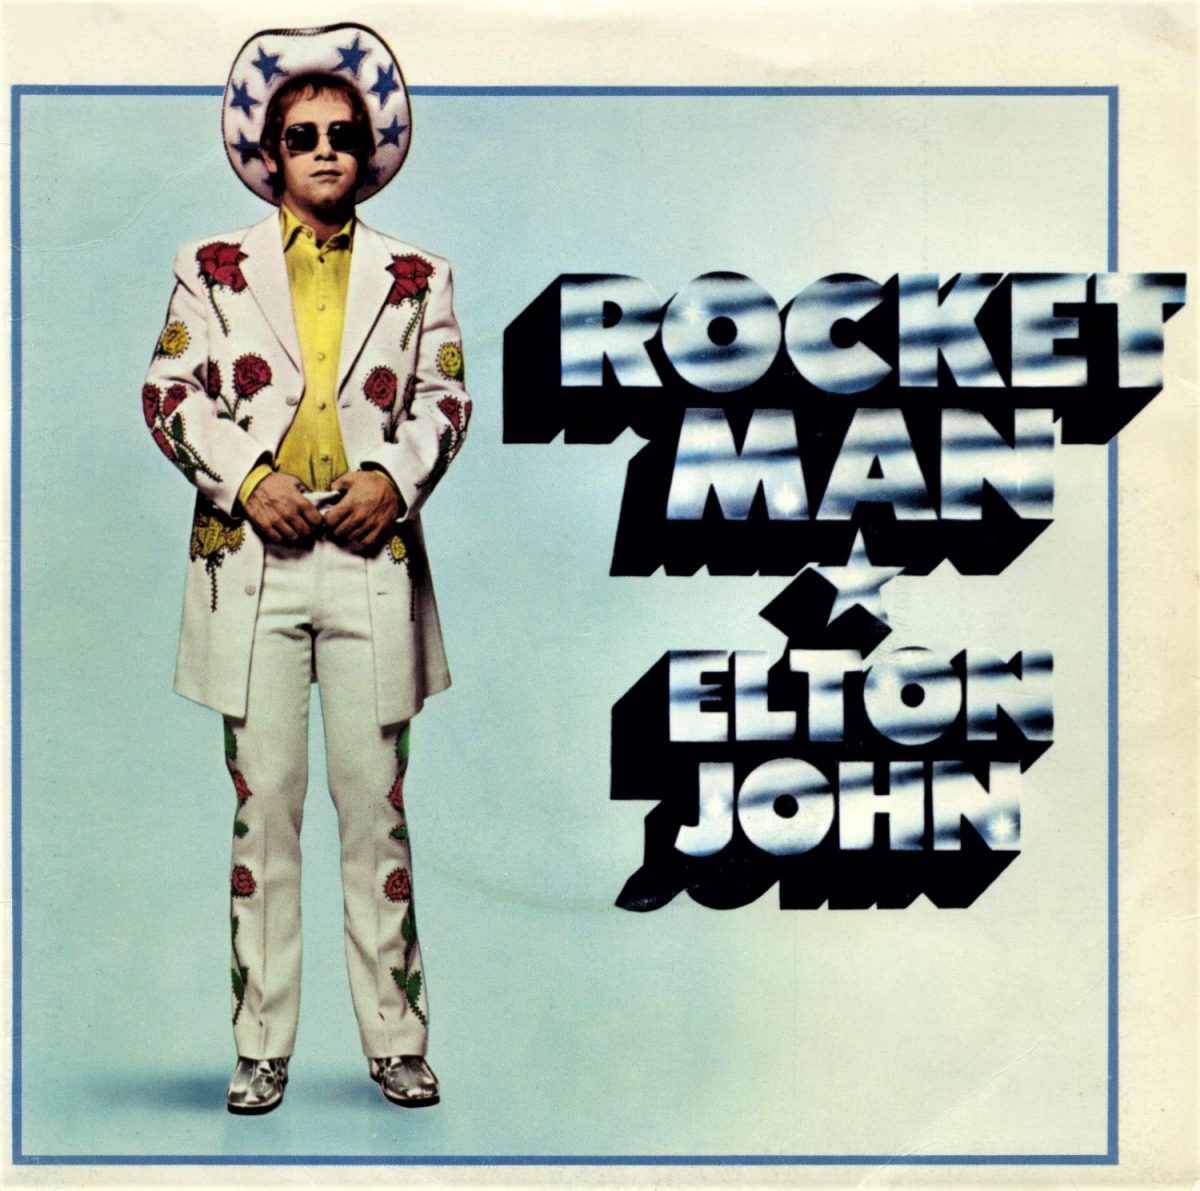 Elton Joh, Rocket Man, single, 1970s, superstar, music, Celebrity Regressions